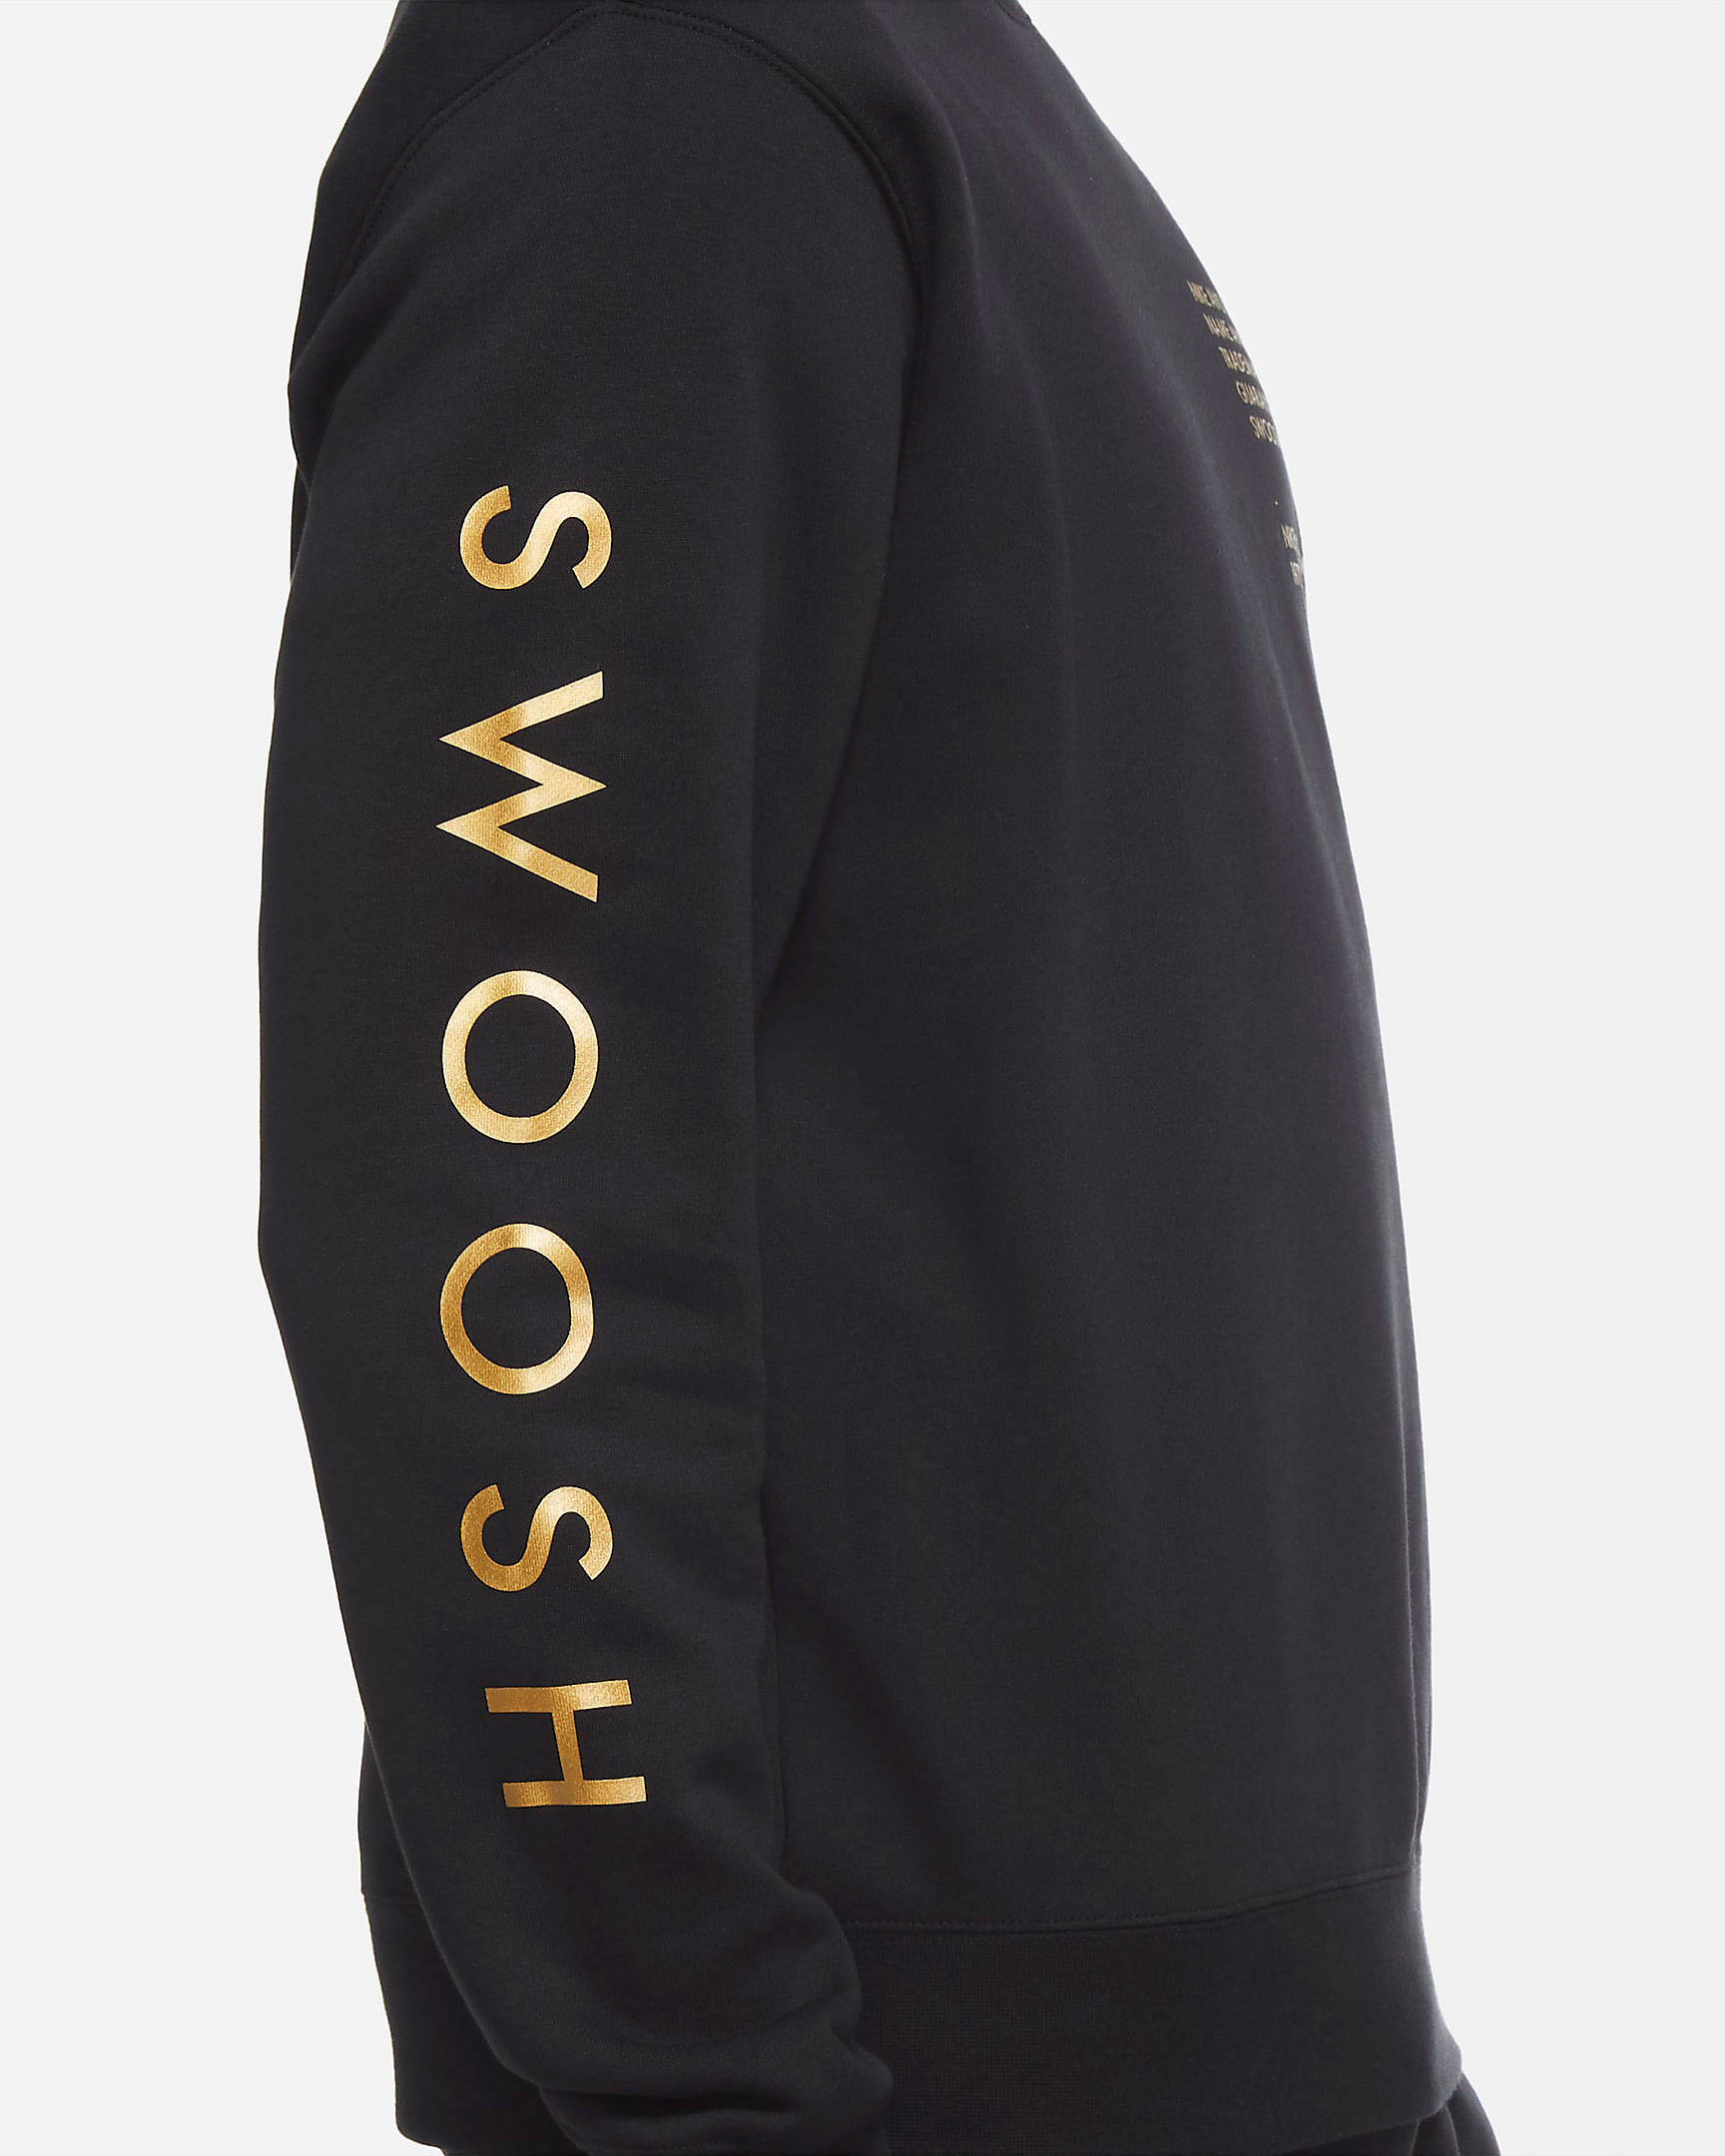 Nike Sportswear Swoosh Black Gold Hoodie and Sweatshirt | SportFits.com